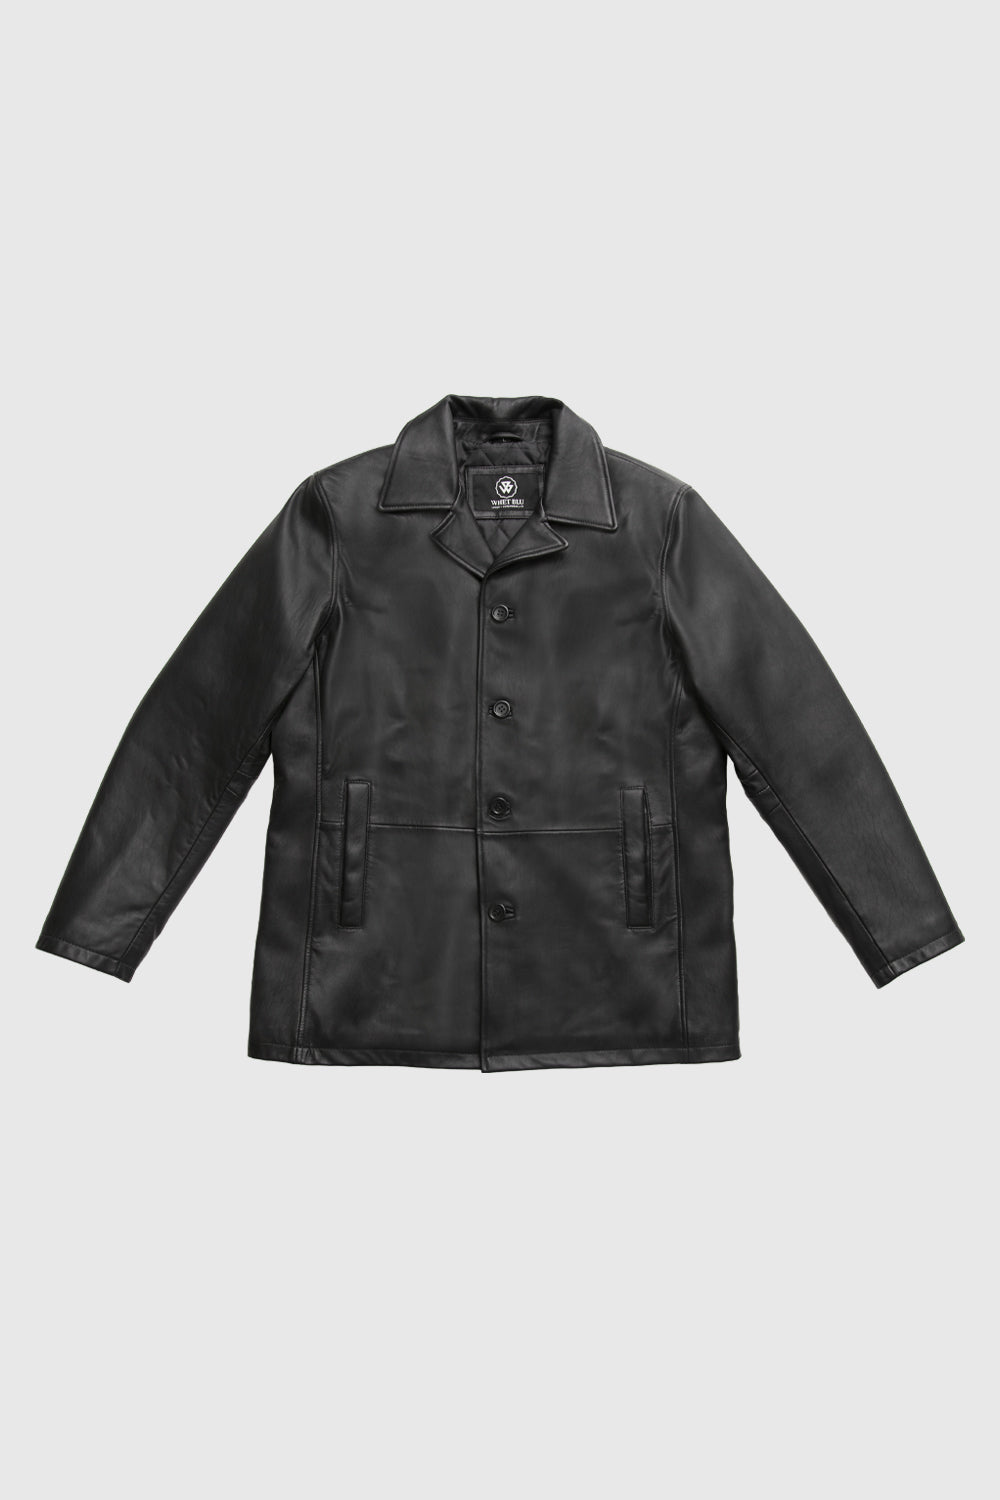 Strata Mens Fashion Leather Jacket Men's New Zealand Lambskin Jacket Whet Blu NYC S Black 